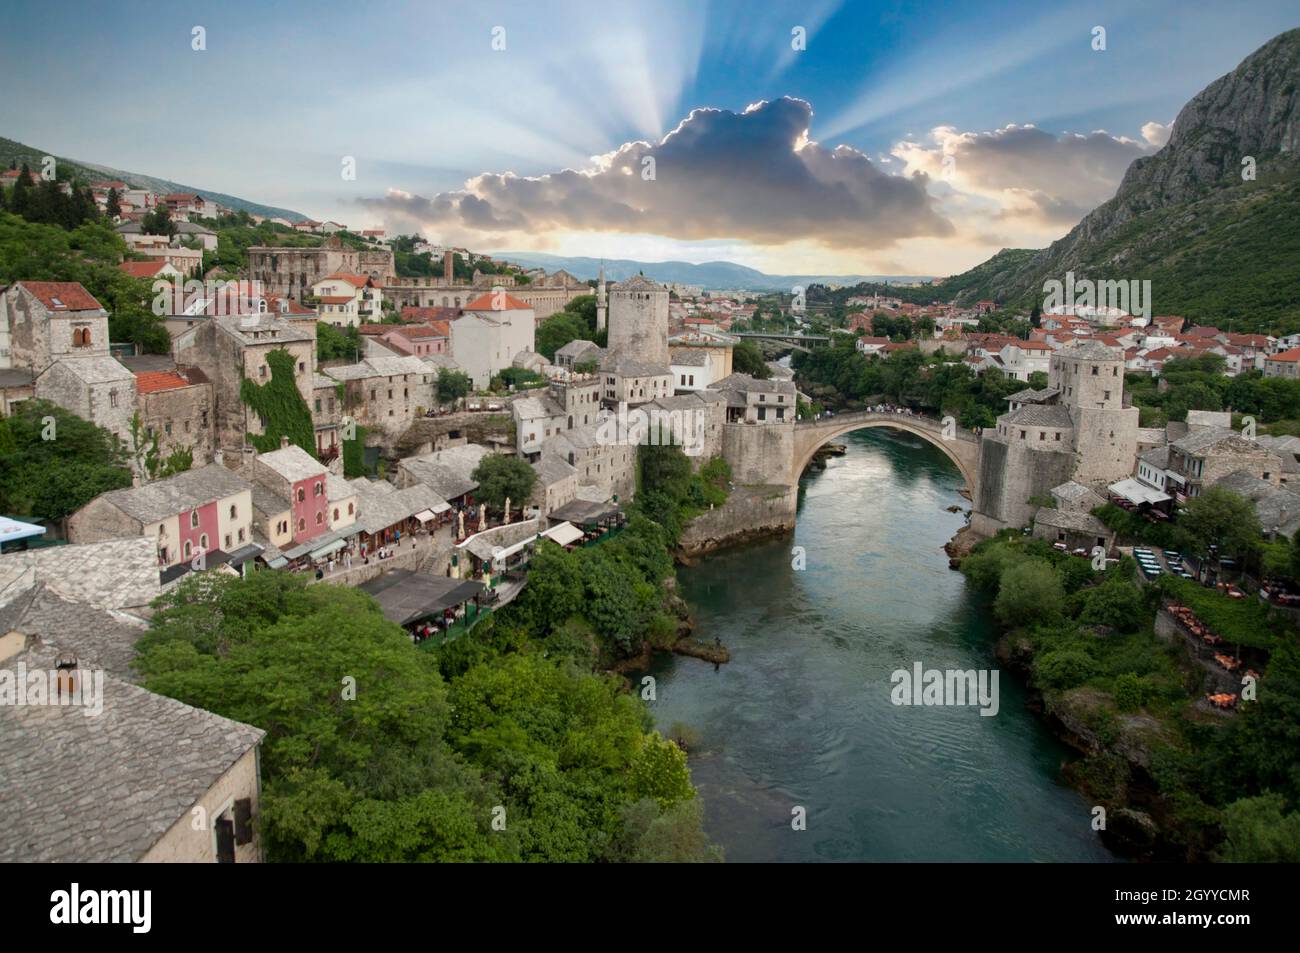 View of Stari Most Bridge in Mostar, Bosnia Herzegovina restored after the civil war. Stock Photo